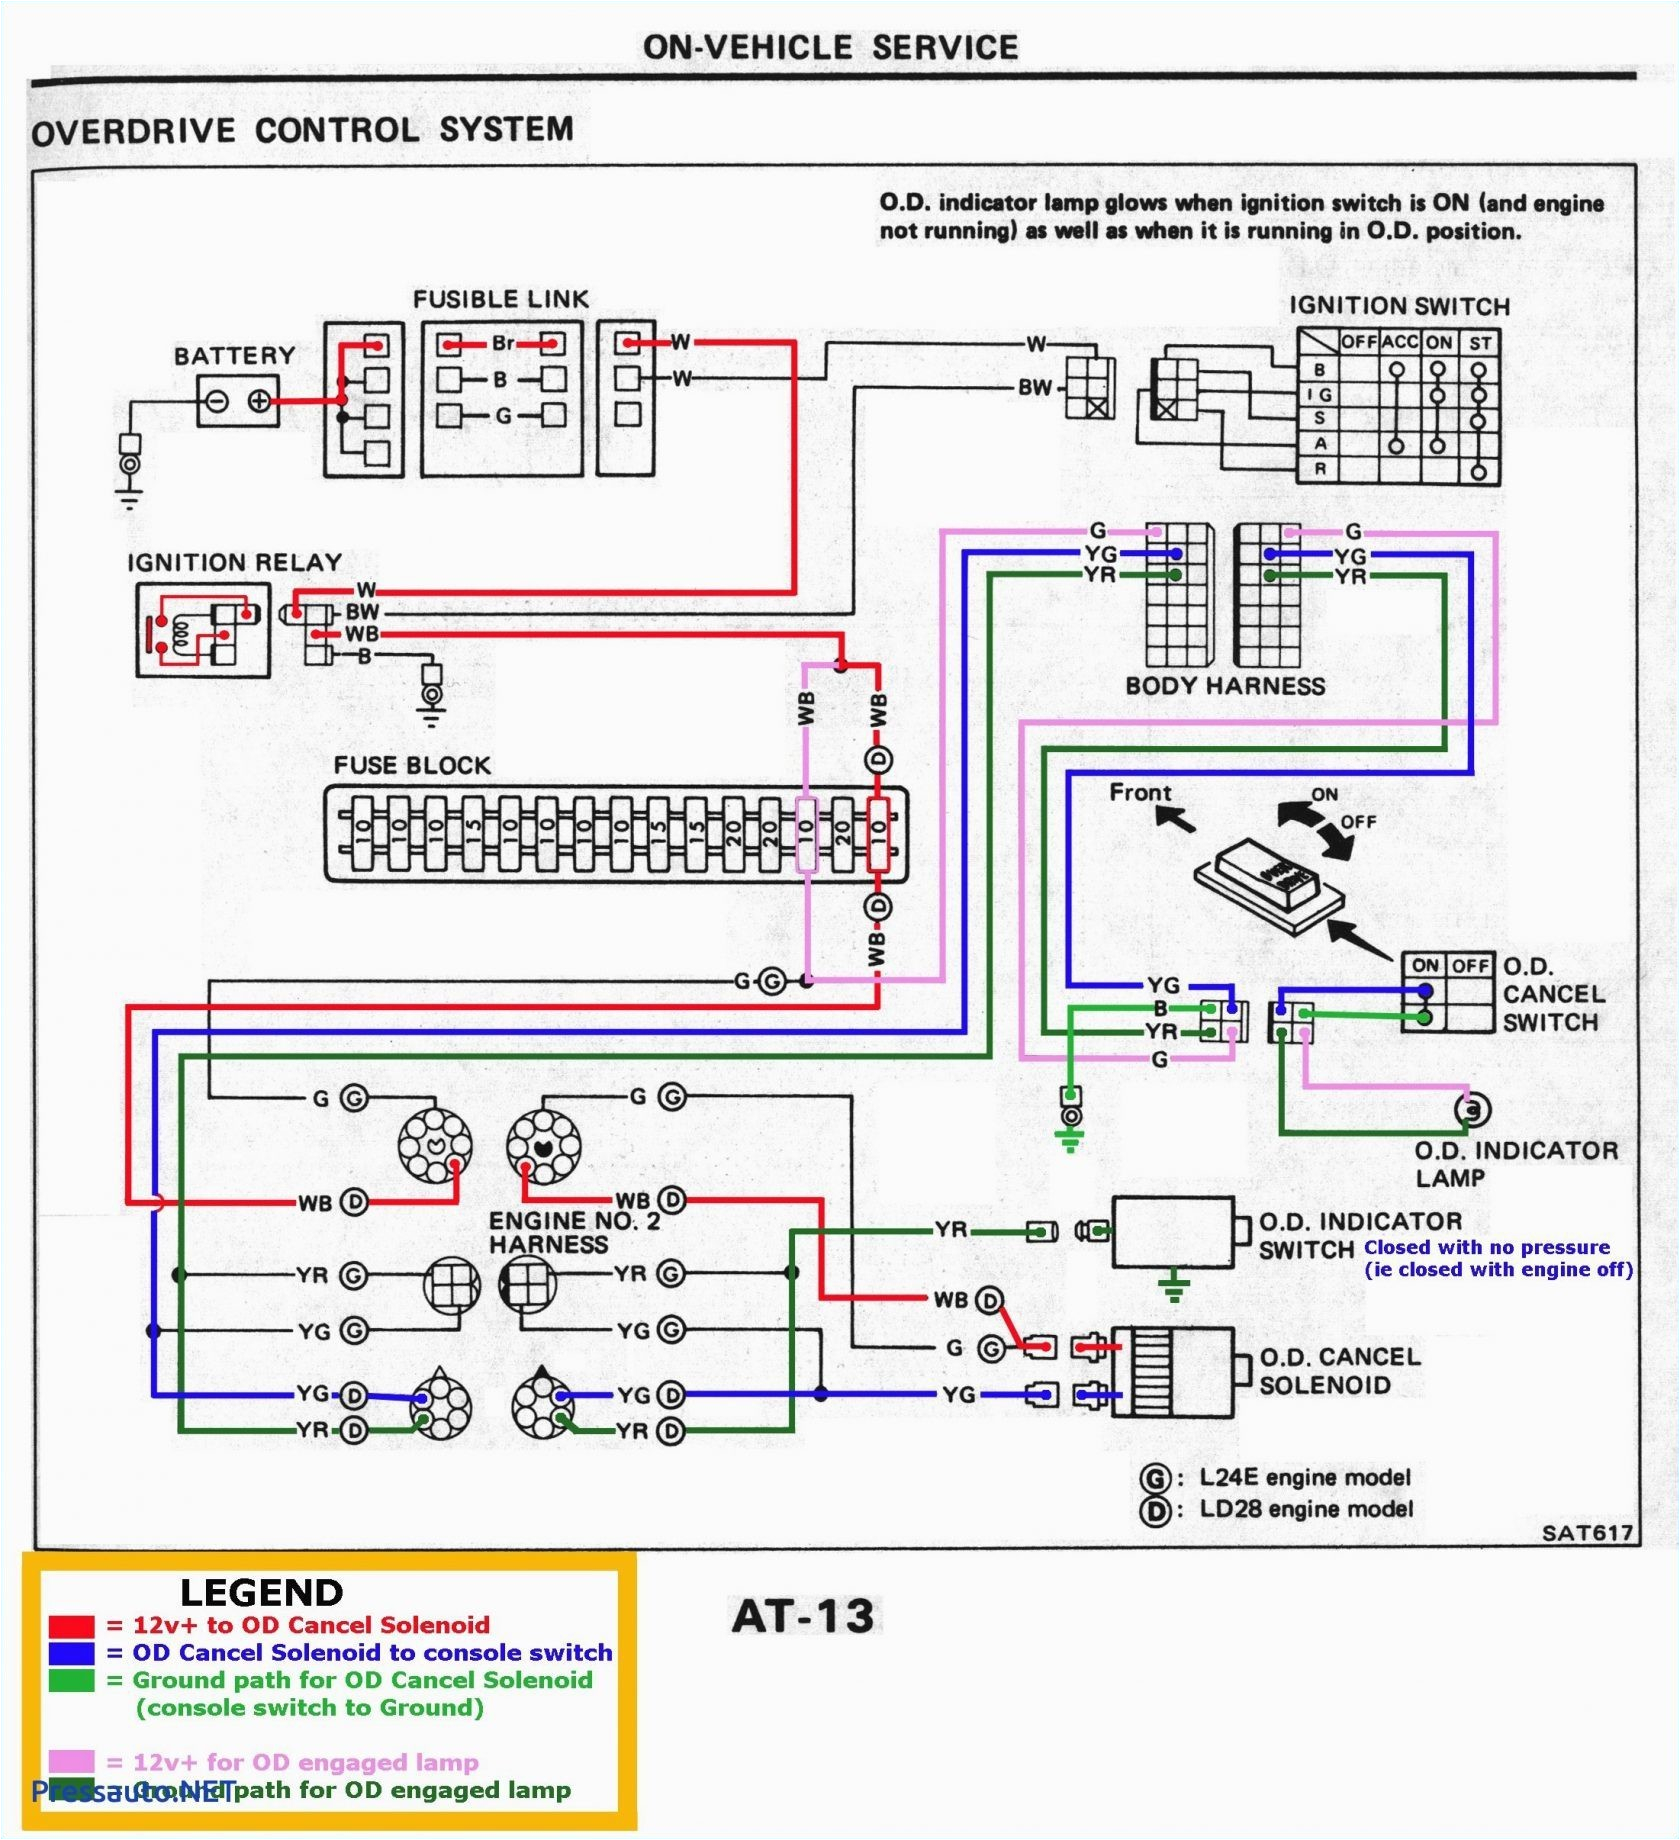 wds bmw wiring diagram system wiring diagram note wds bmw wiring diagram system download bmw wds